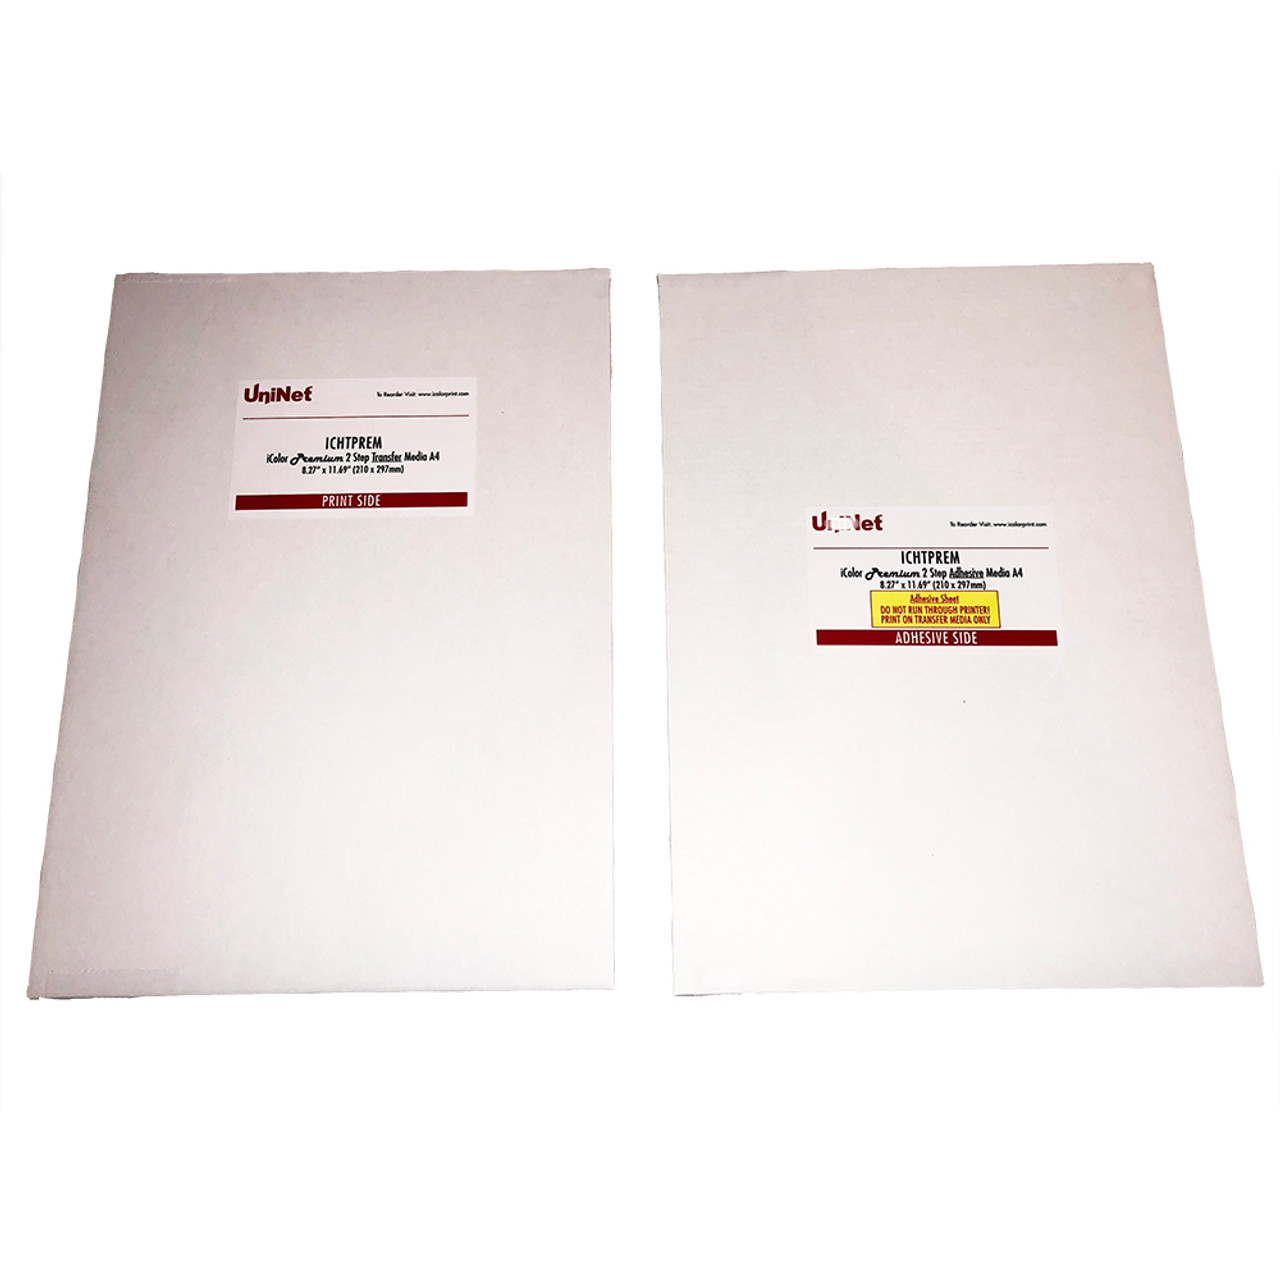 IColor Banner Paper  Laser Transfer Supplies